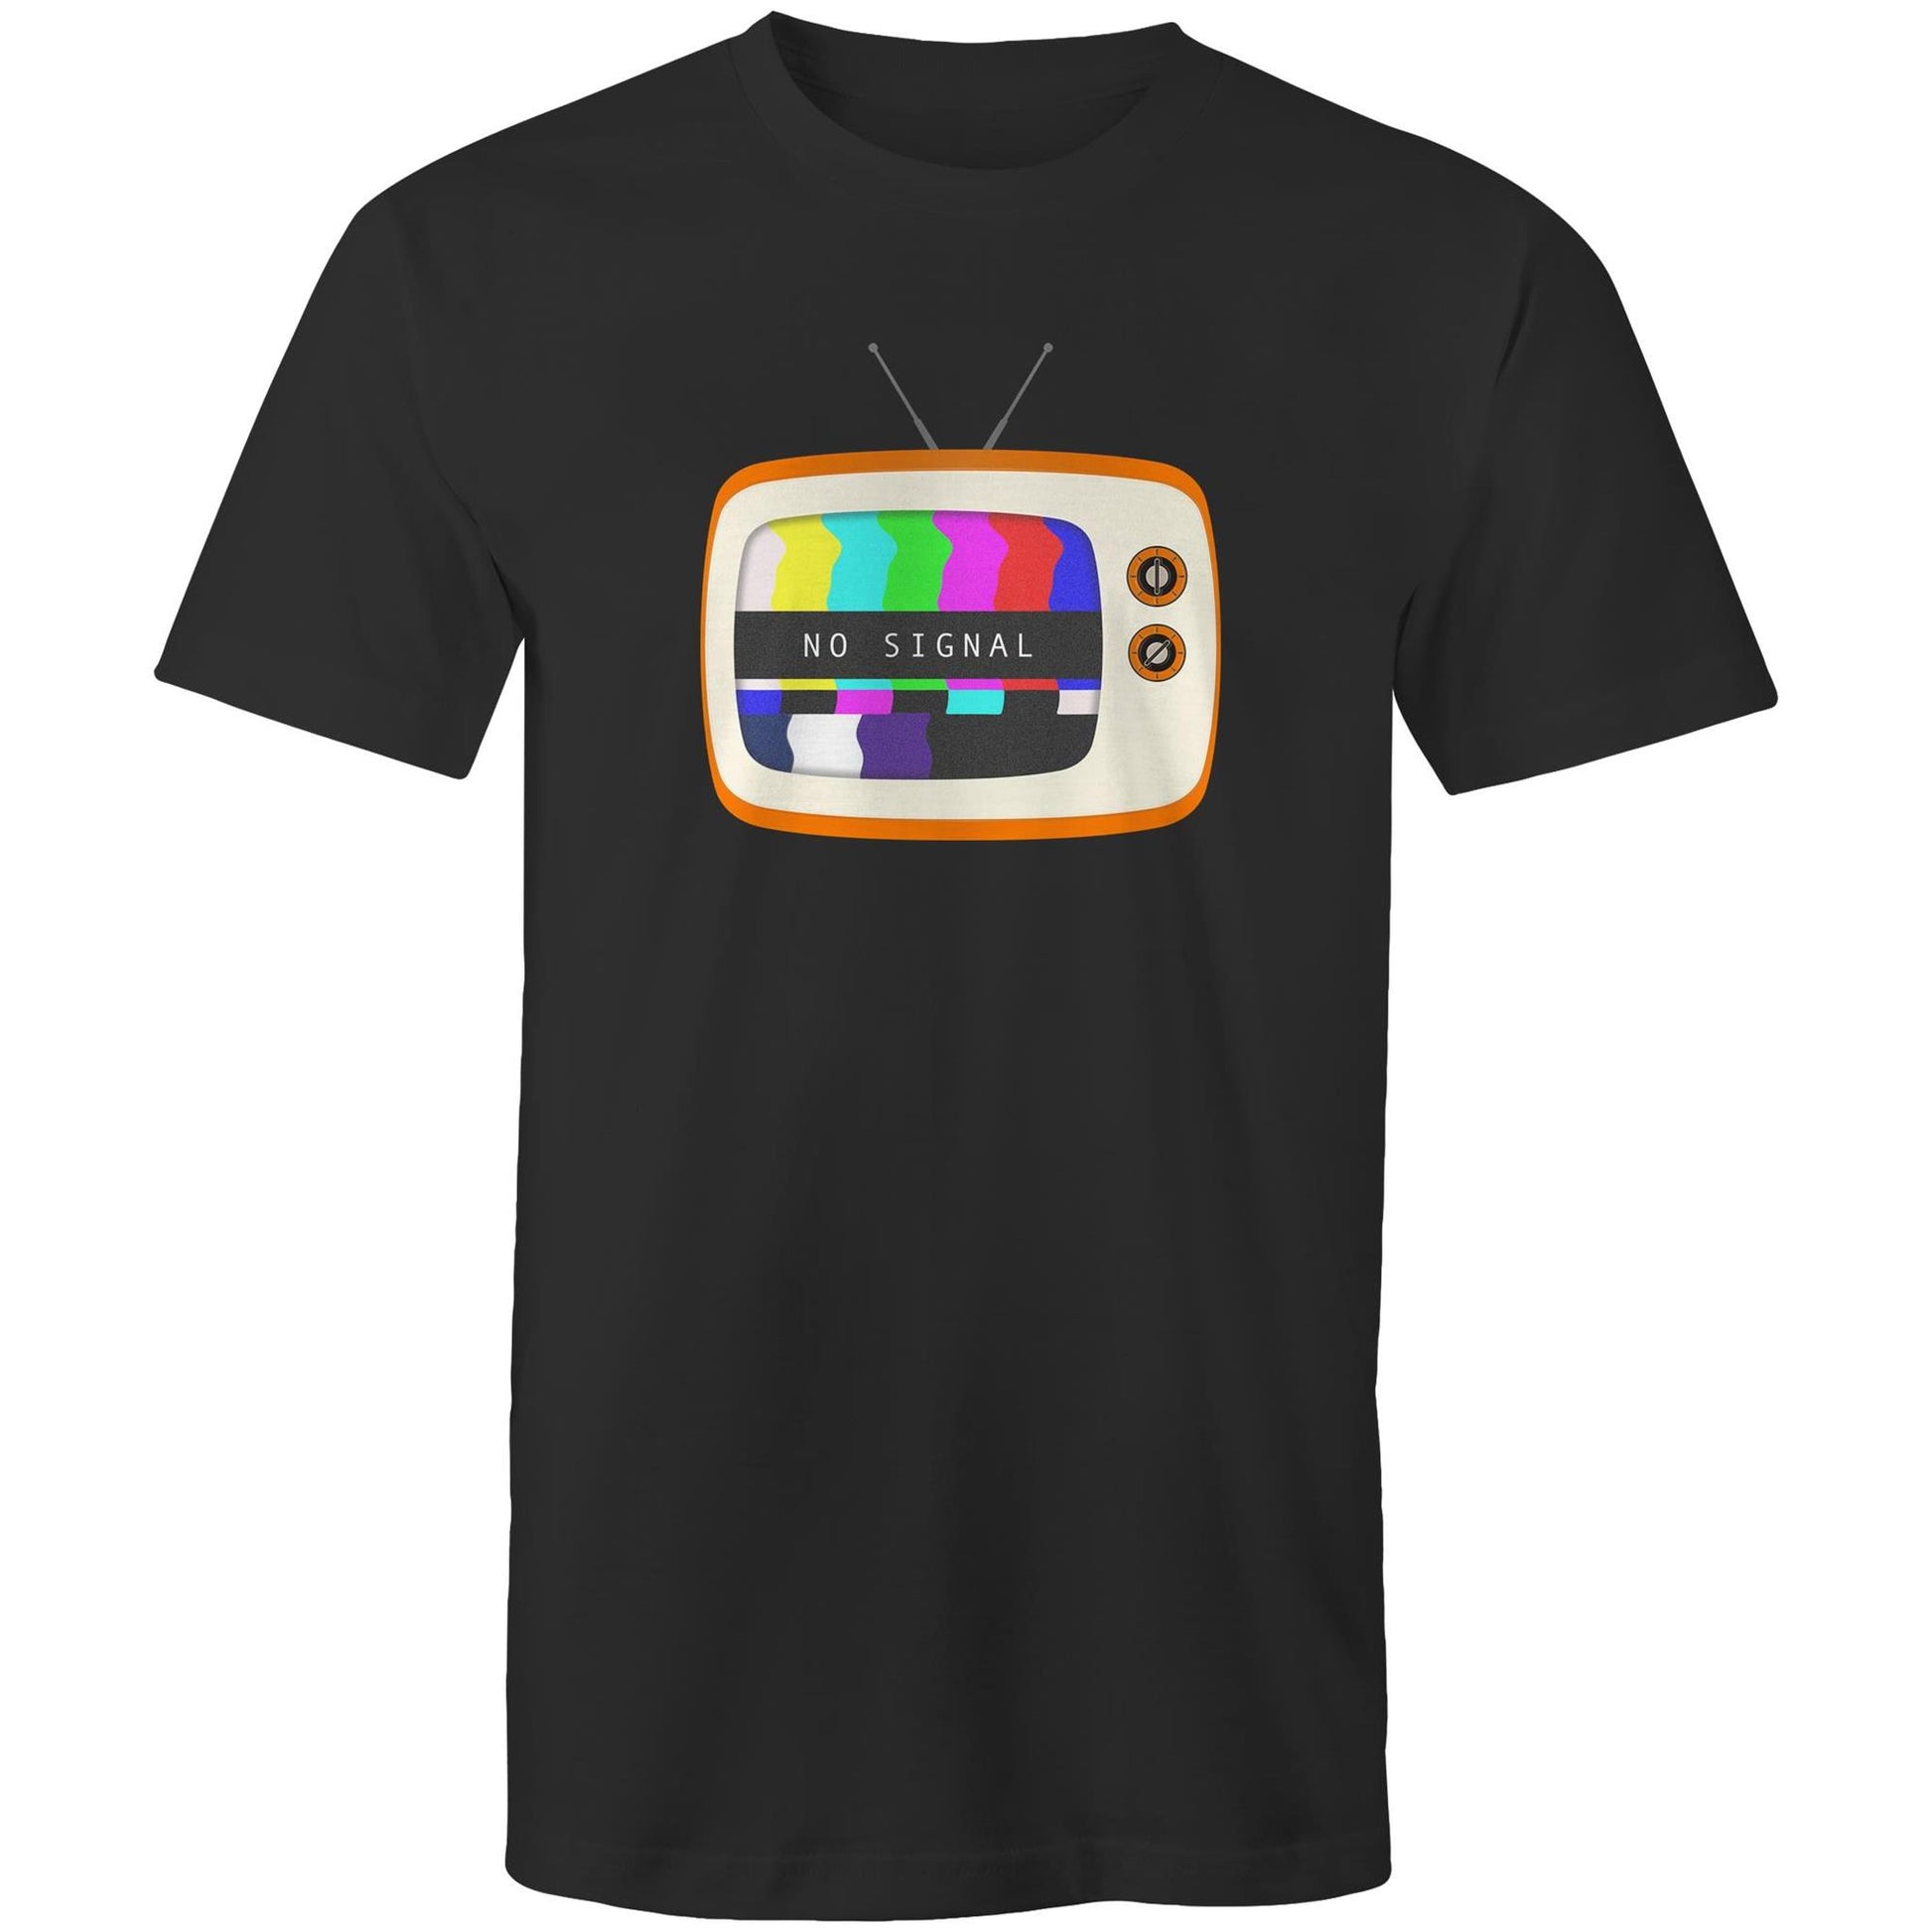 Retro Television, No Signal - Mens T-Shirt Black Mens T-shirt Retro